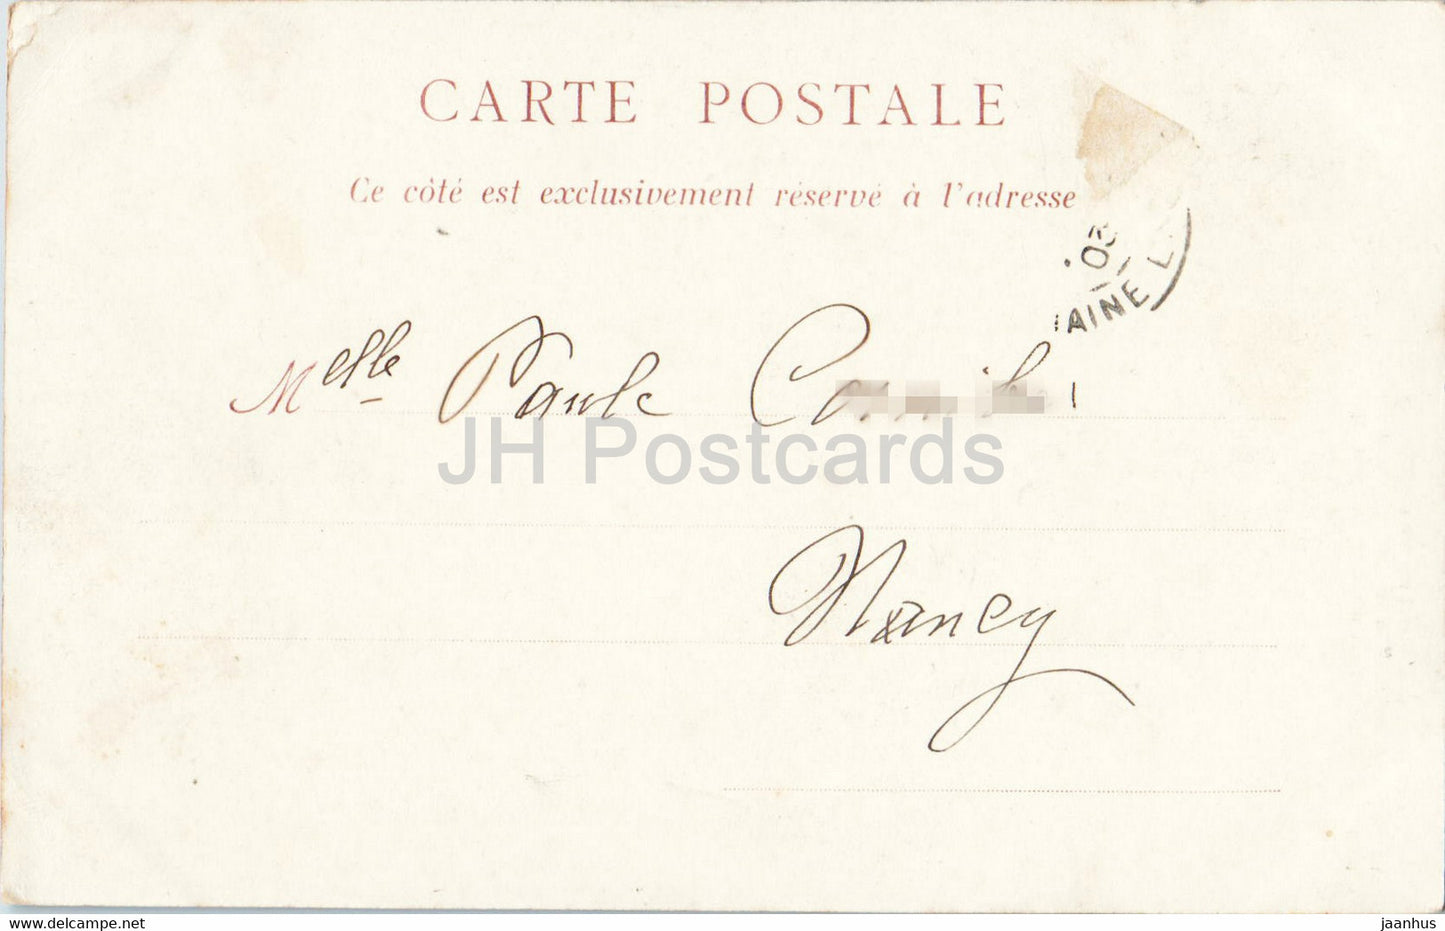 Angers - Ponts de Ce et environs - Frau - Volkskostüme - alte Postkarte - 1903 - Frankreich - gebraucht